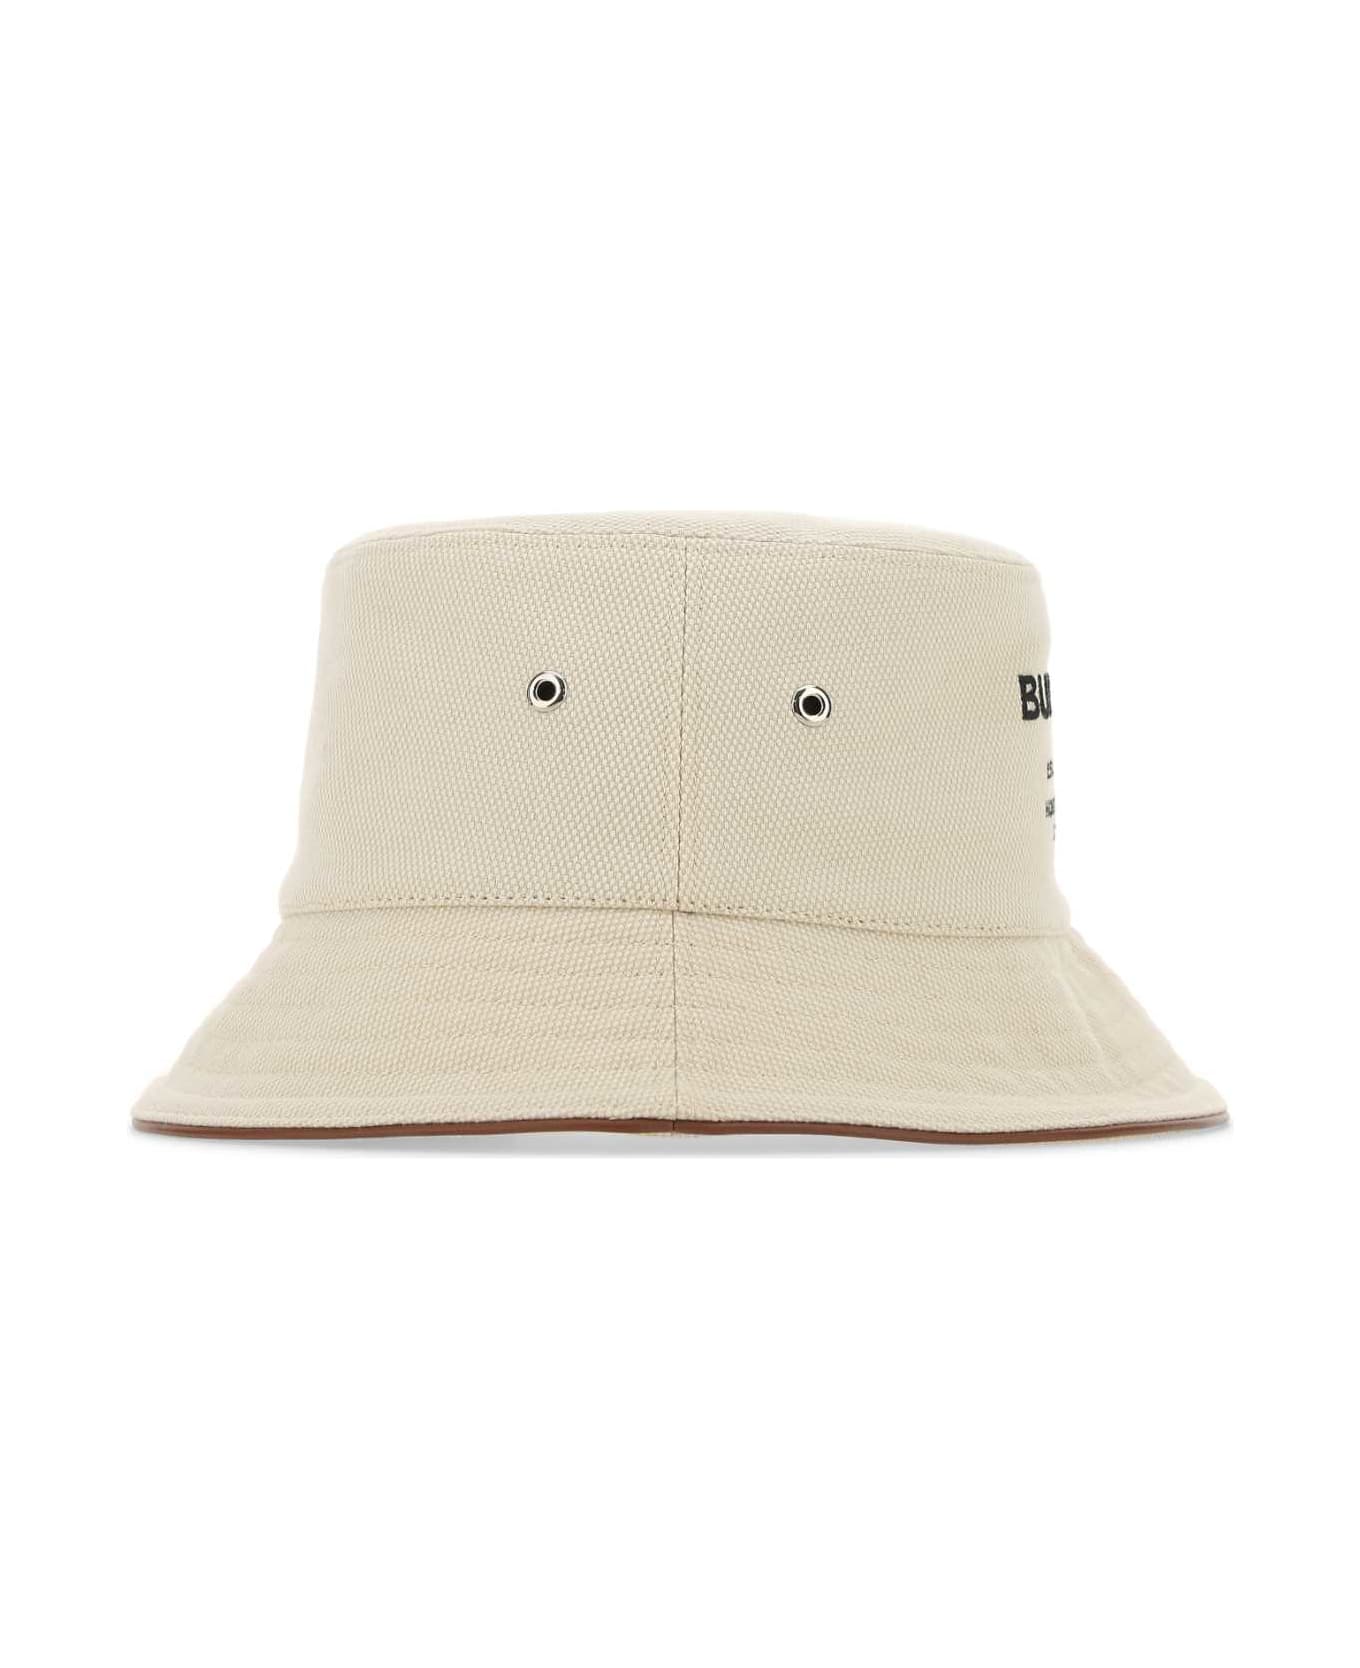 Burberry Sand Cotton Hat - A1395 ヘアアクセサリー